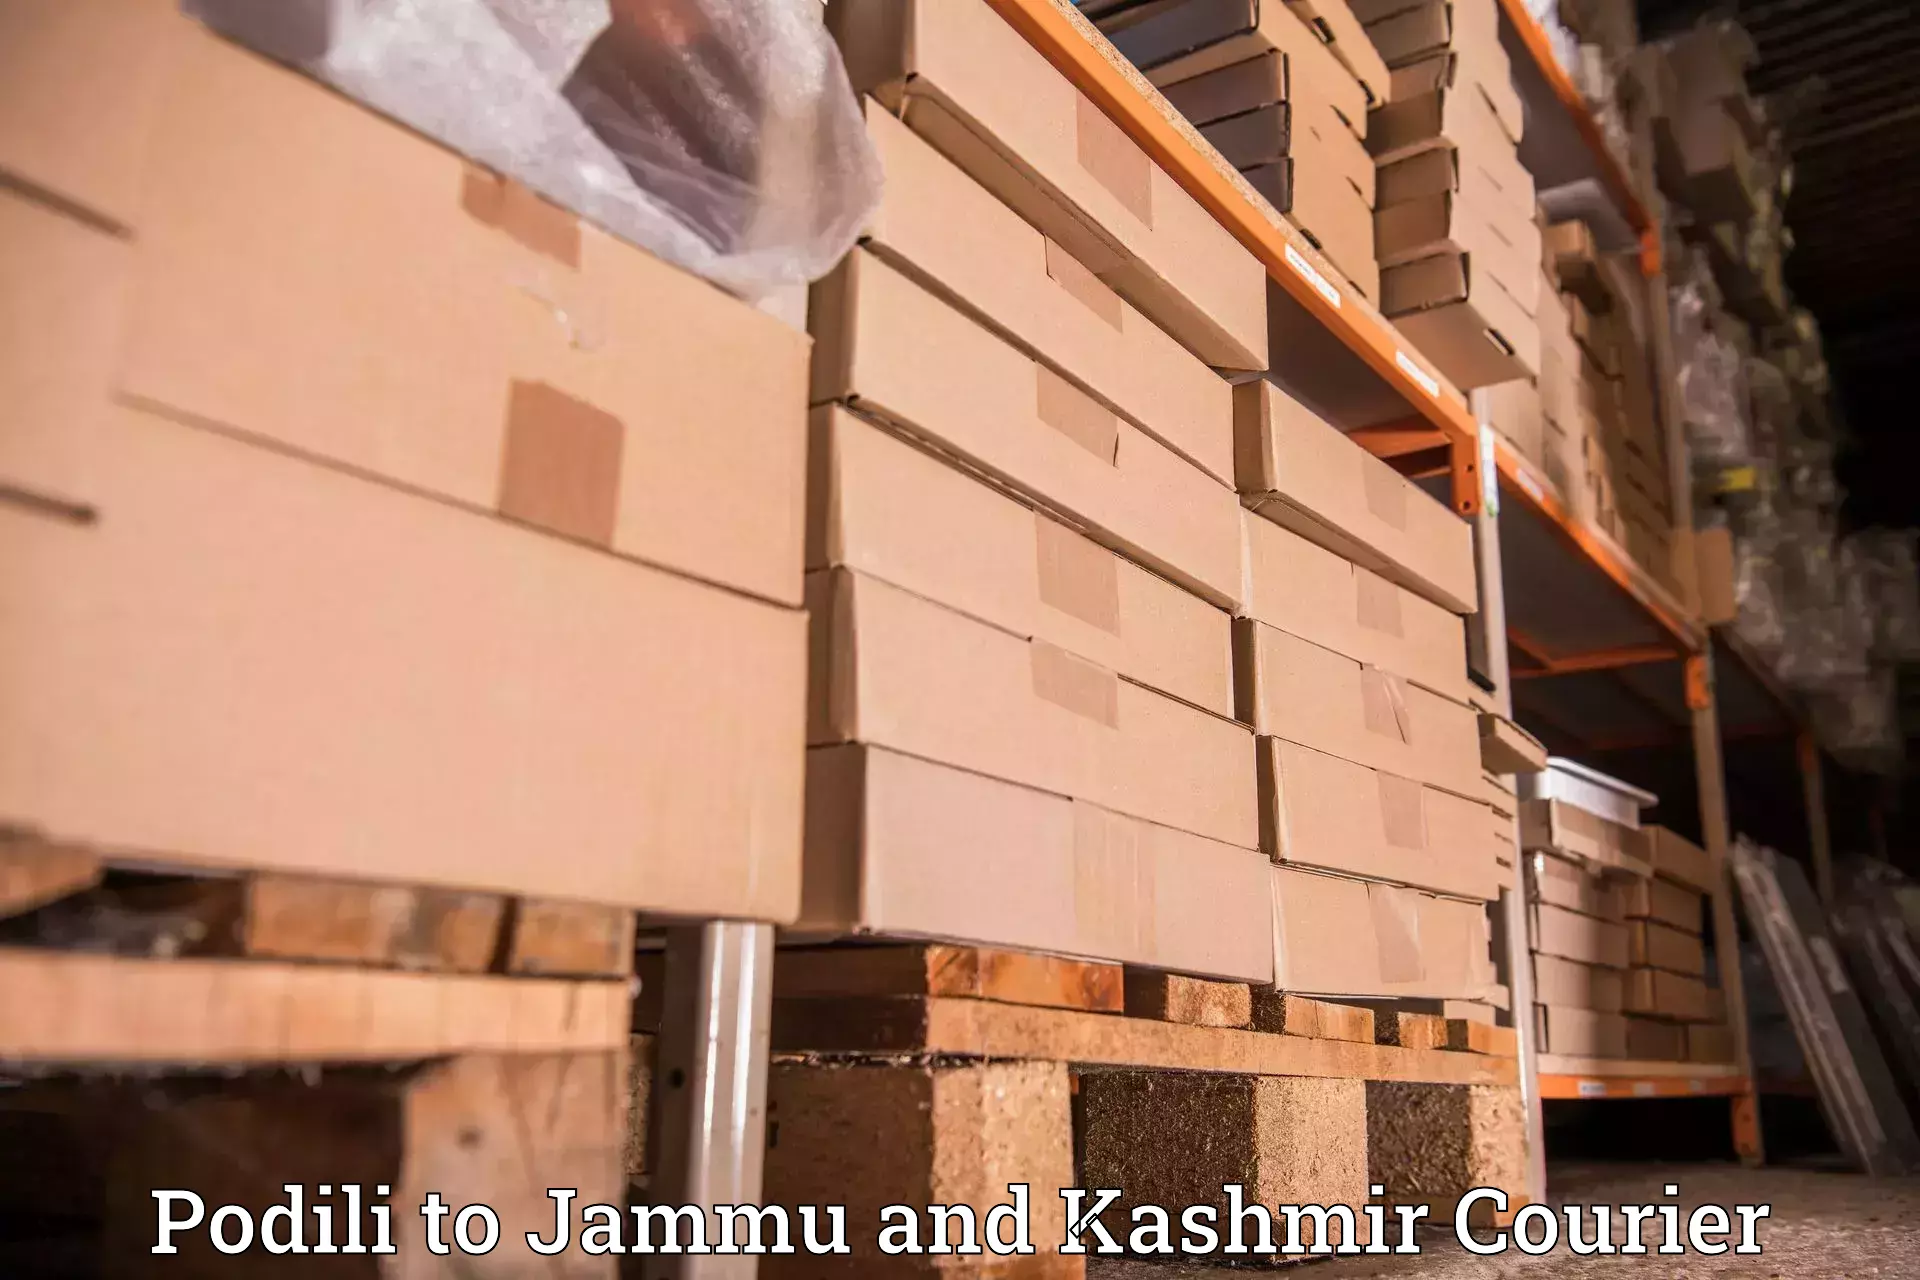 Global courier networks Podili to Srinagar Kashmir